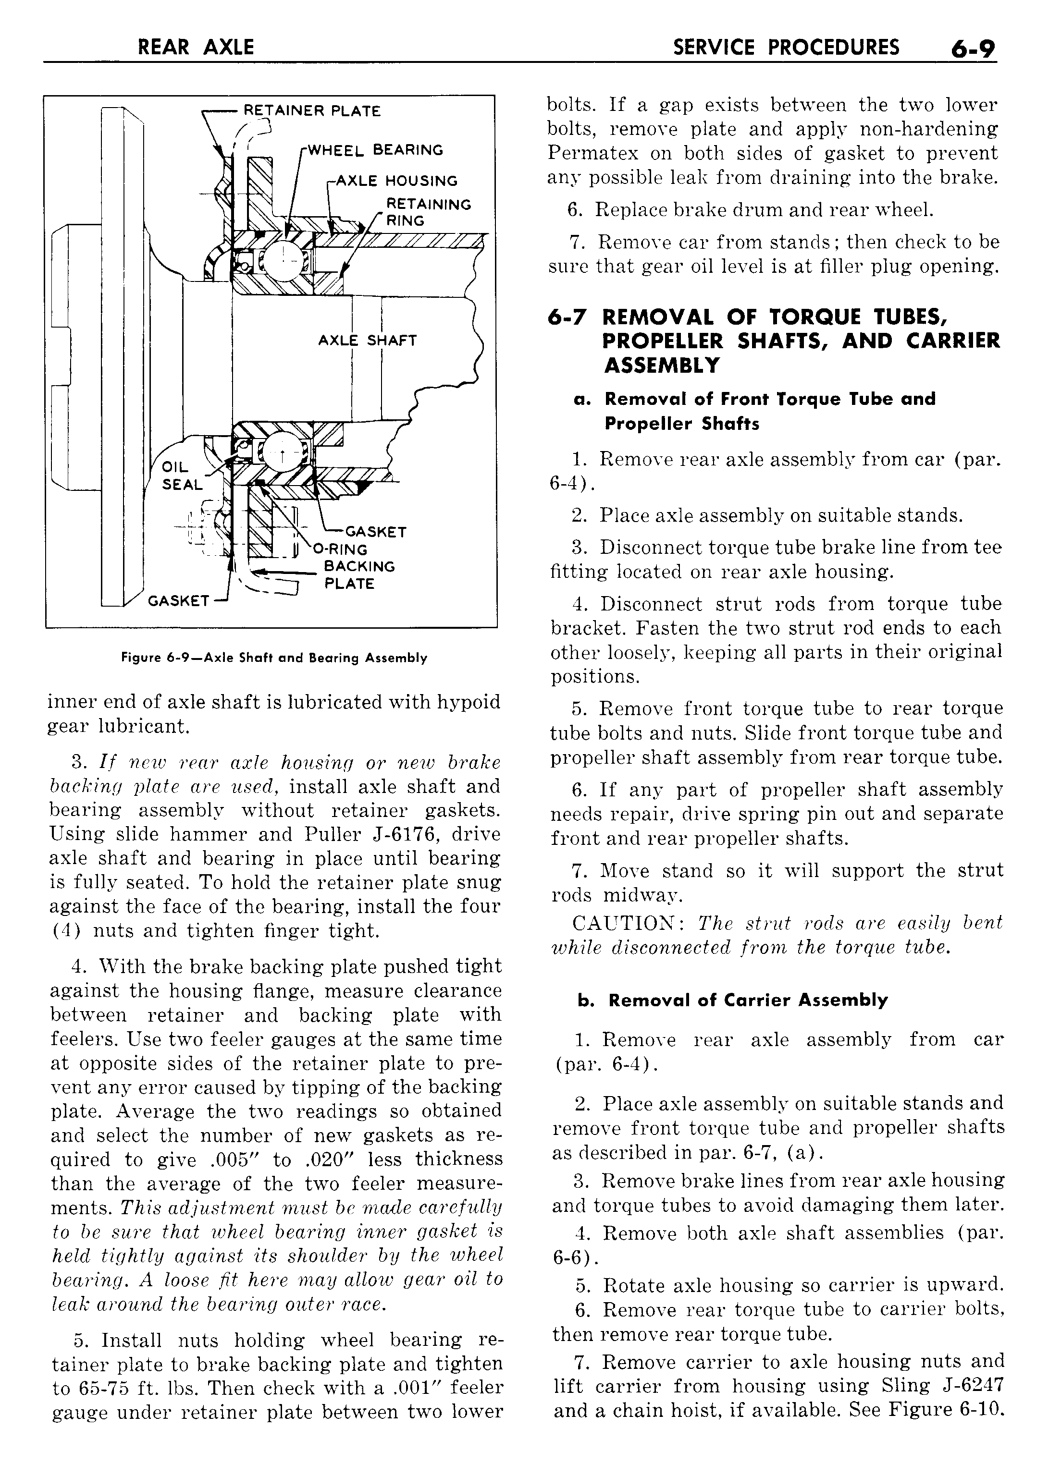 n_07 1957 Buick Shop Manual - Rear Axle-009-009.jpg